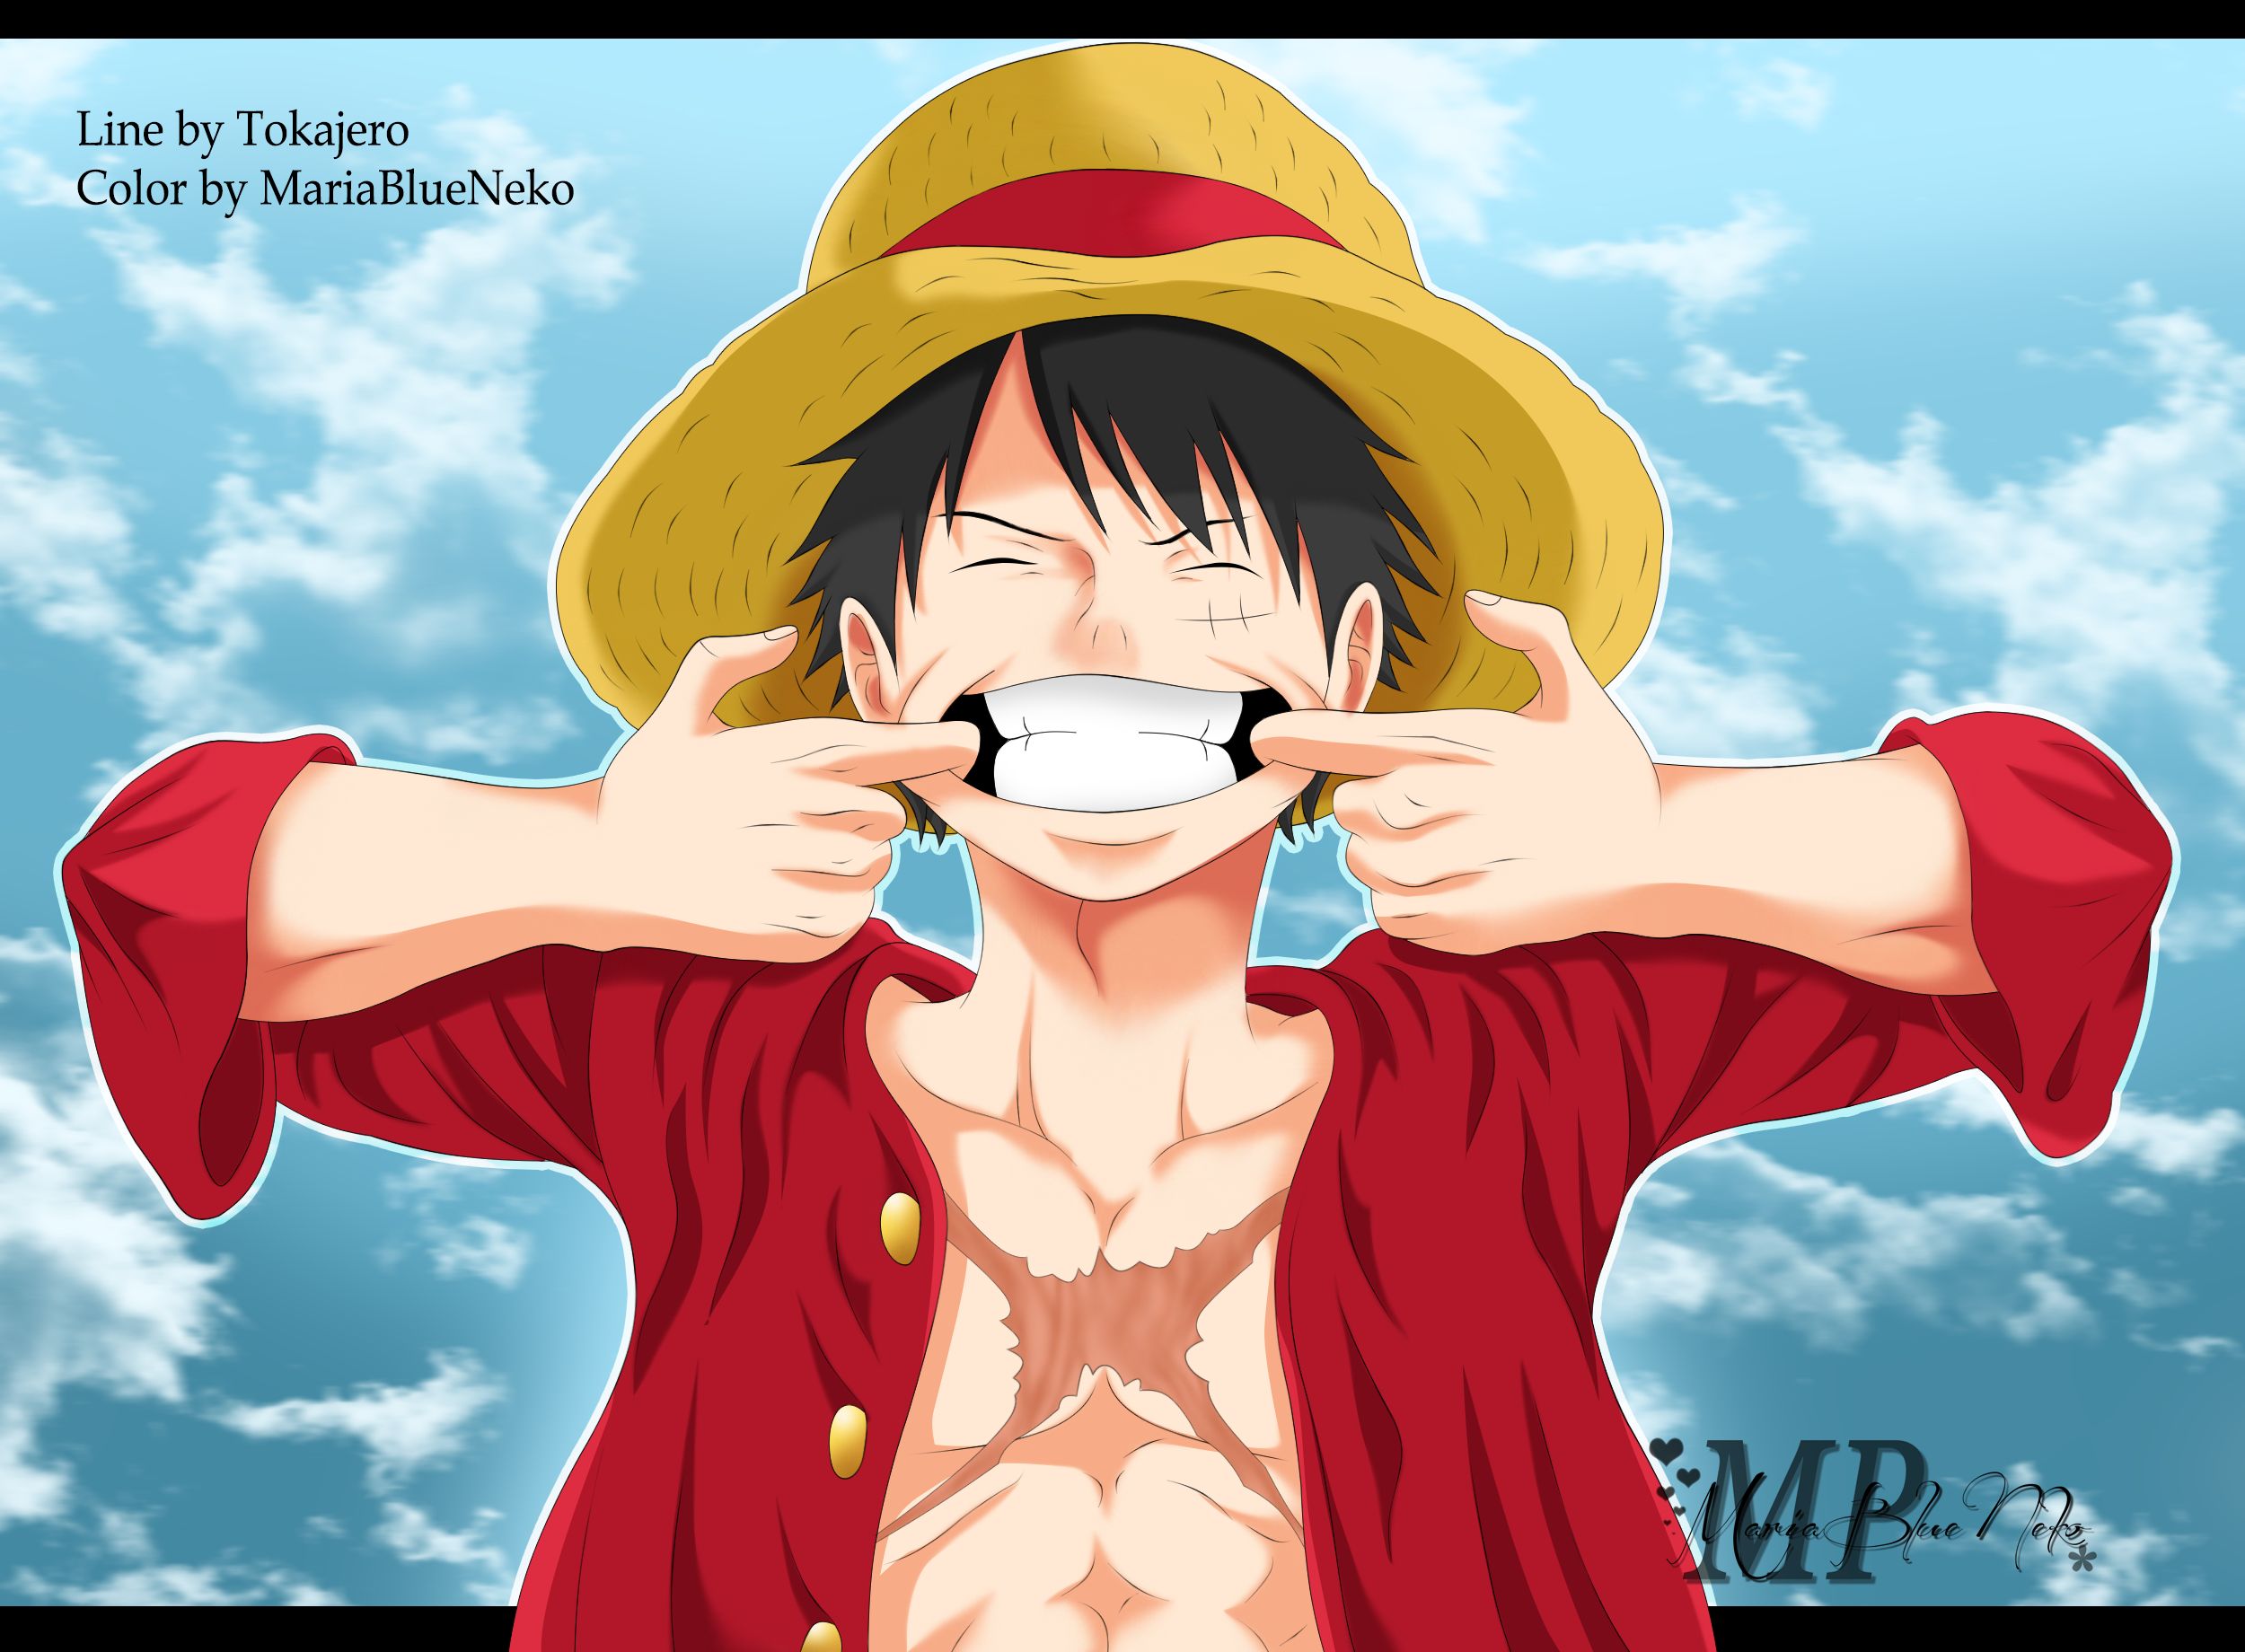 One Piece Anime Monkey D Luffy on Rage 4K wallpaper download